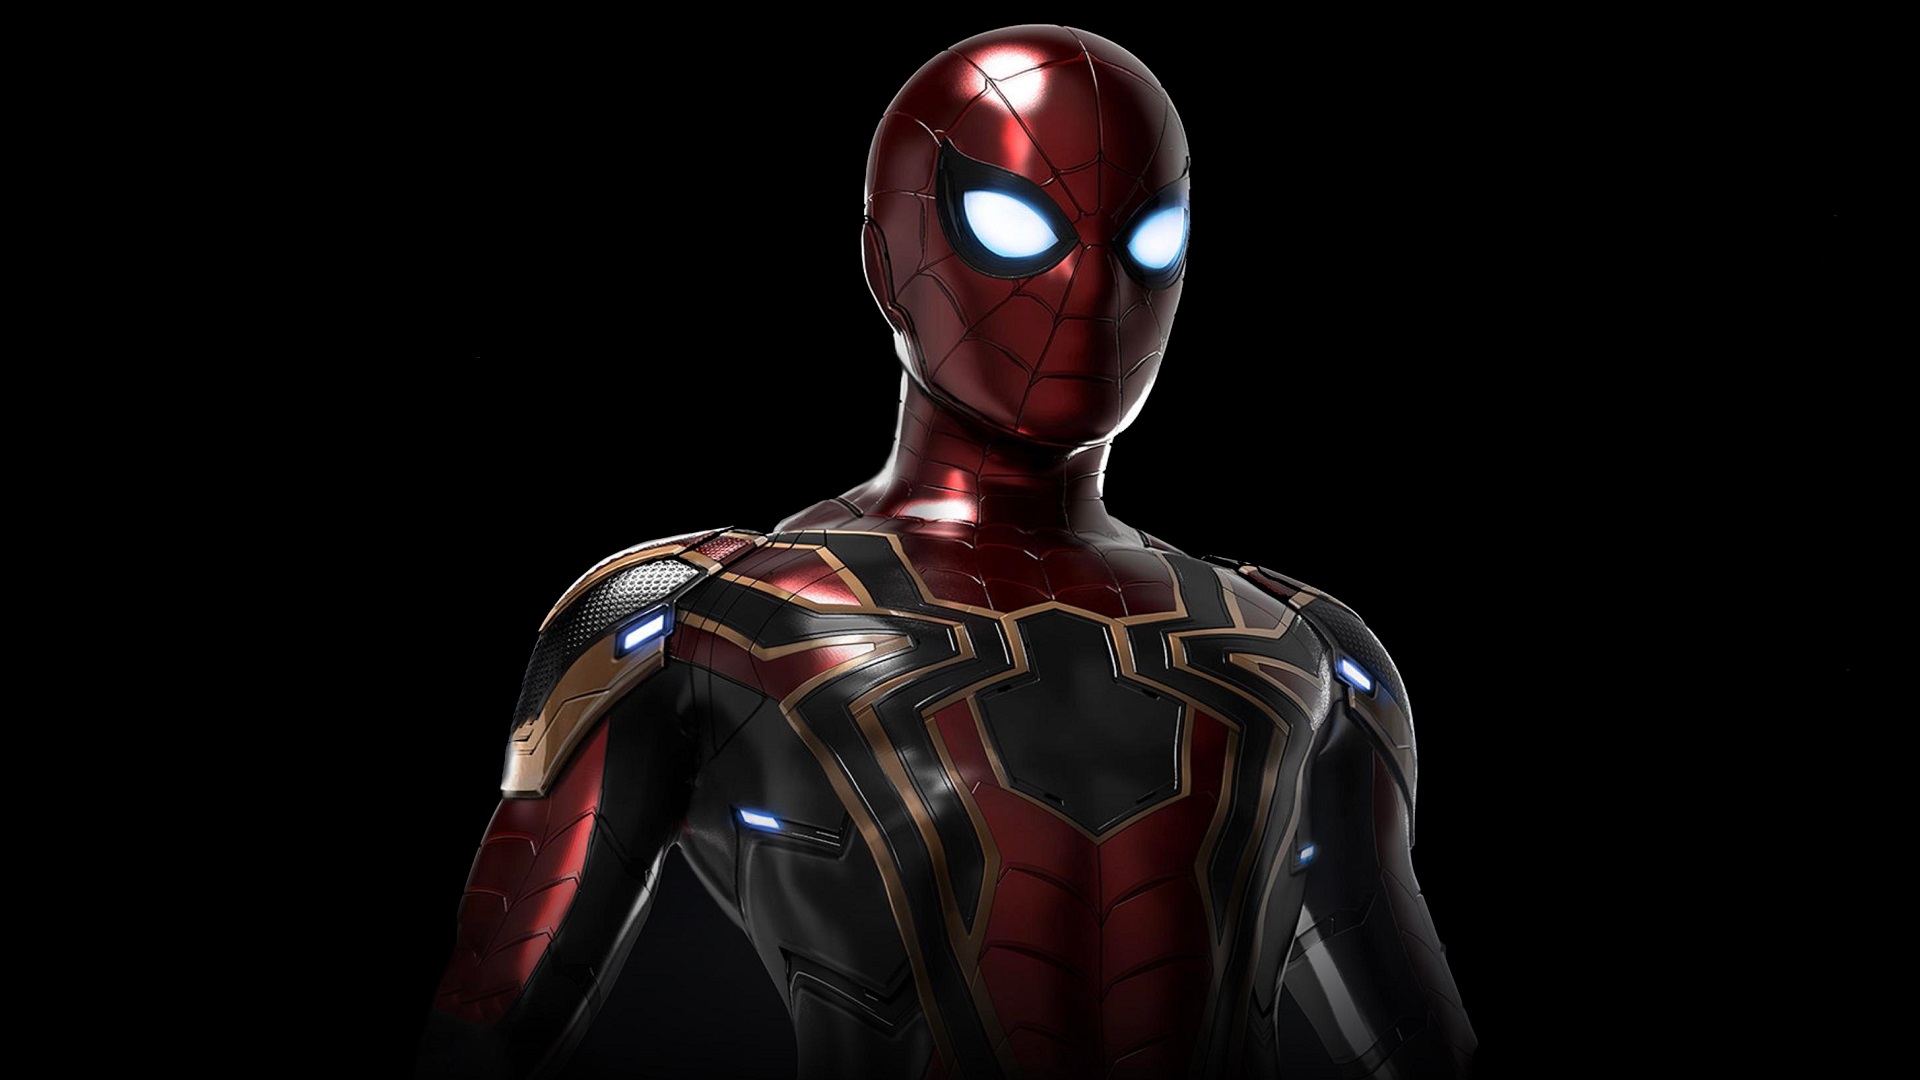 Marvel Comics Spider Man The Avengers Avengers Infinity War Iron Spider 1920x1080